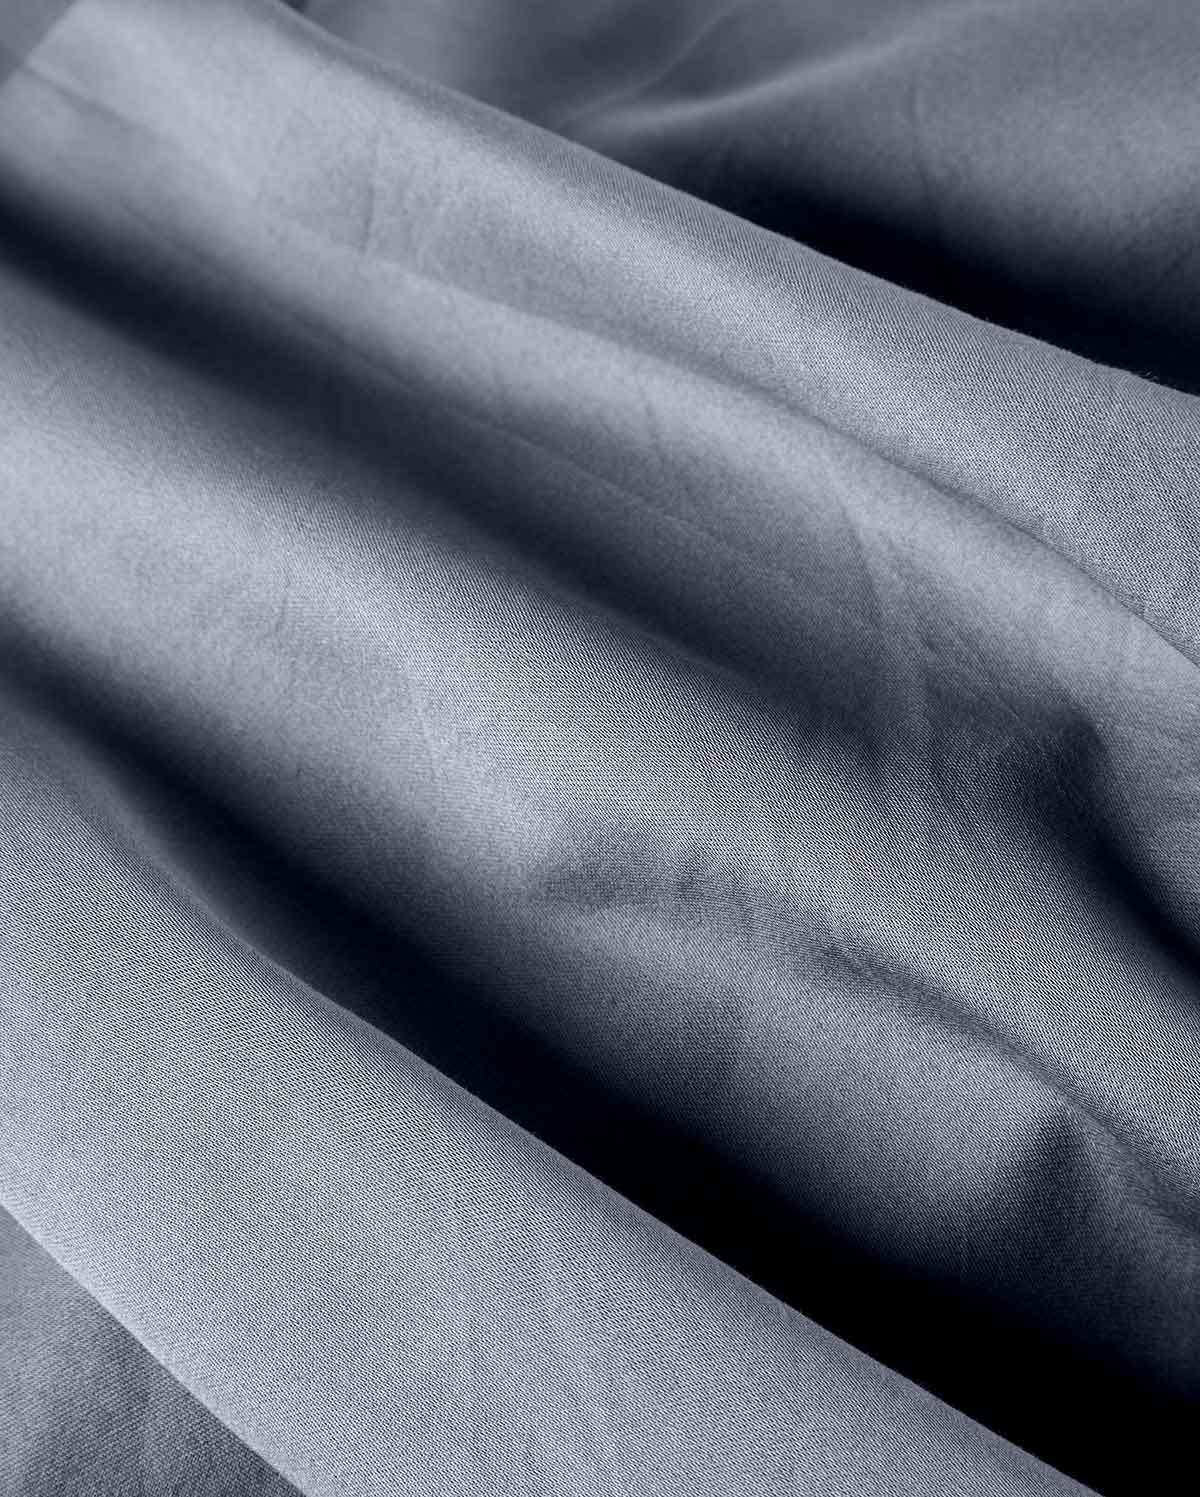 Lavish Sateen - Fitted Sheet Set - Dark Grey